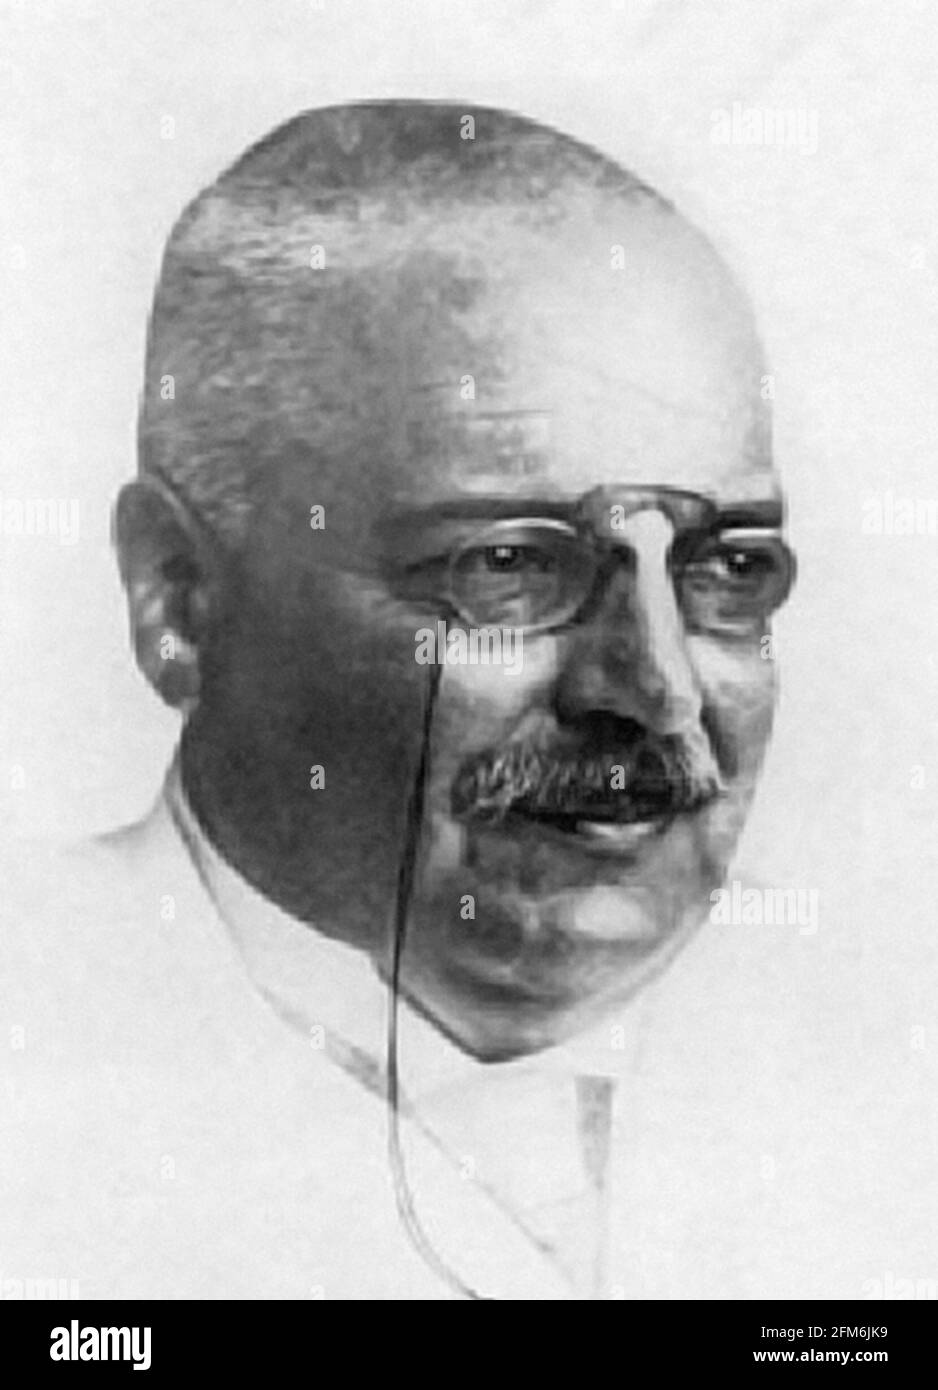 Alois Alzheimer. Portrait du psychiatre allemand, Aloysius Alzheimer (1864-1915) Banque D'Images